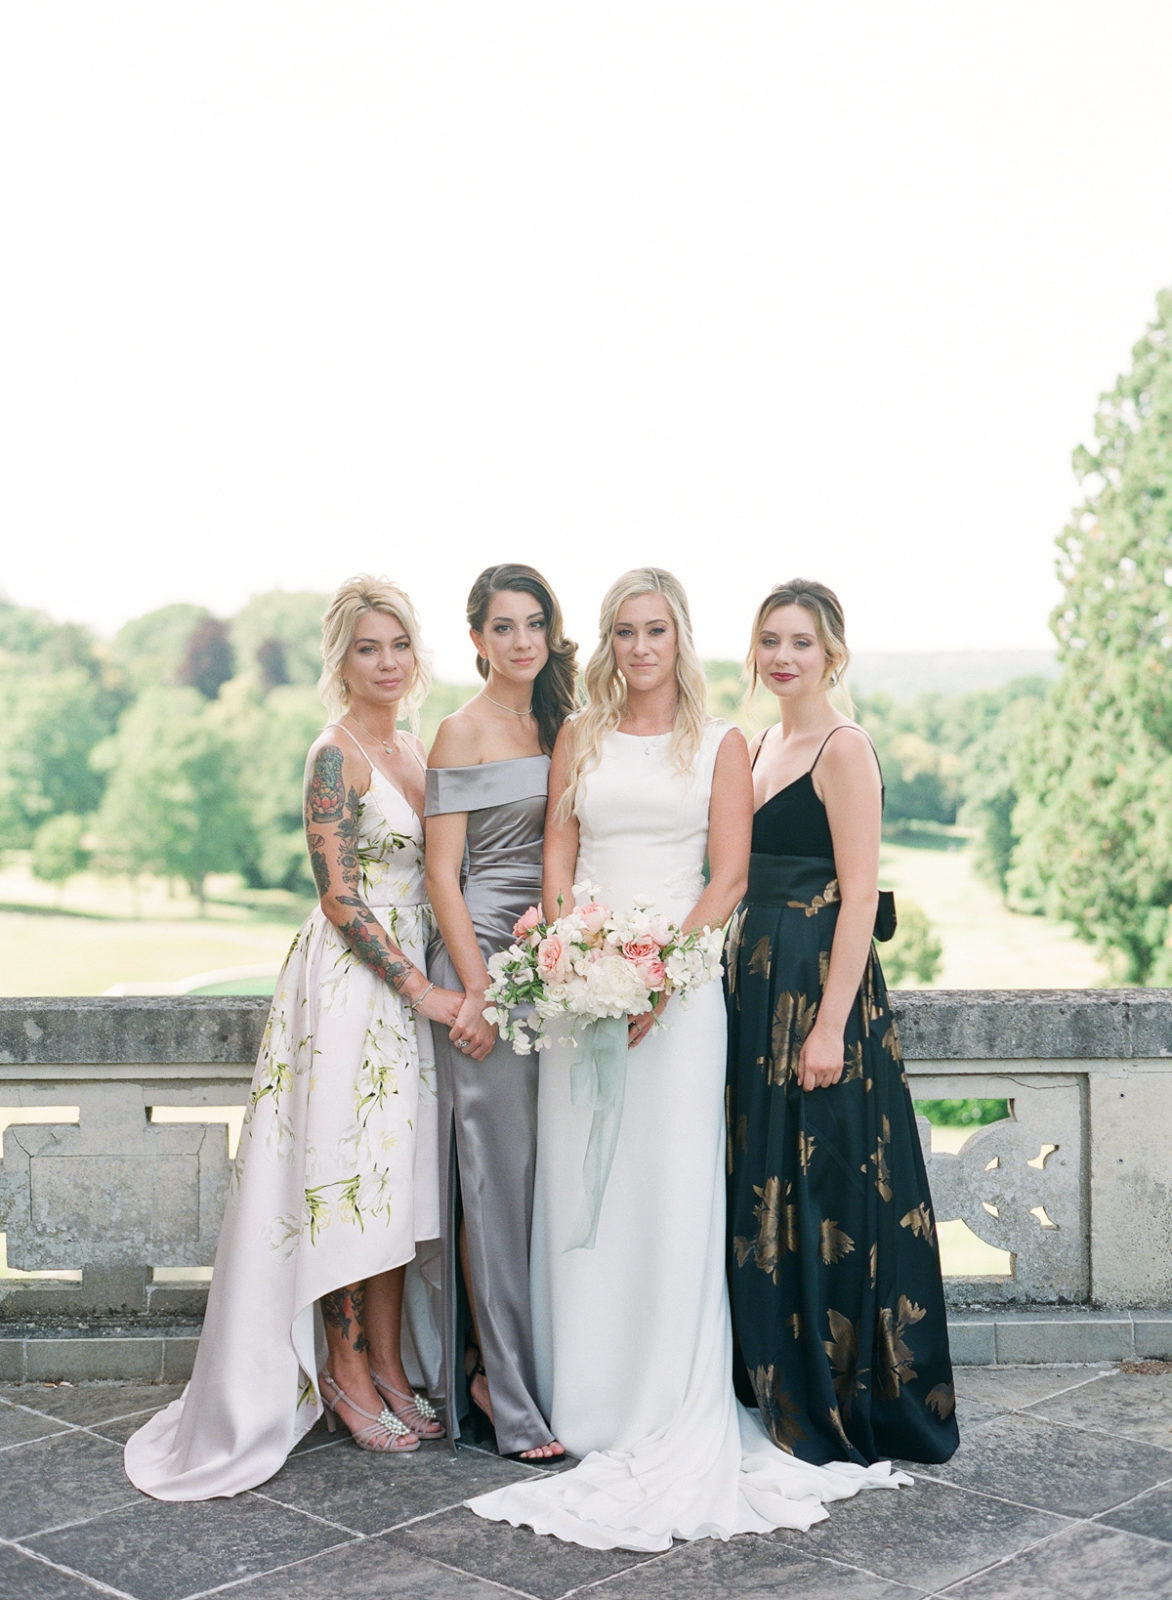 Chateau Bouffemont Wedding Photography | Paris, France Destination Wedding | Molly Carr Photography | Fine Art Film Photography | Jennifer Fox Weddings | Mismatched Bridesmaid Dresses